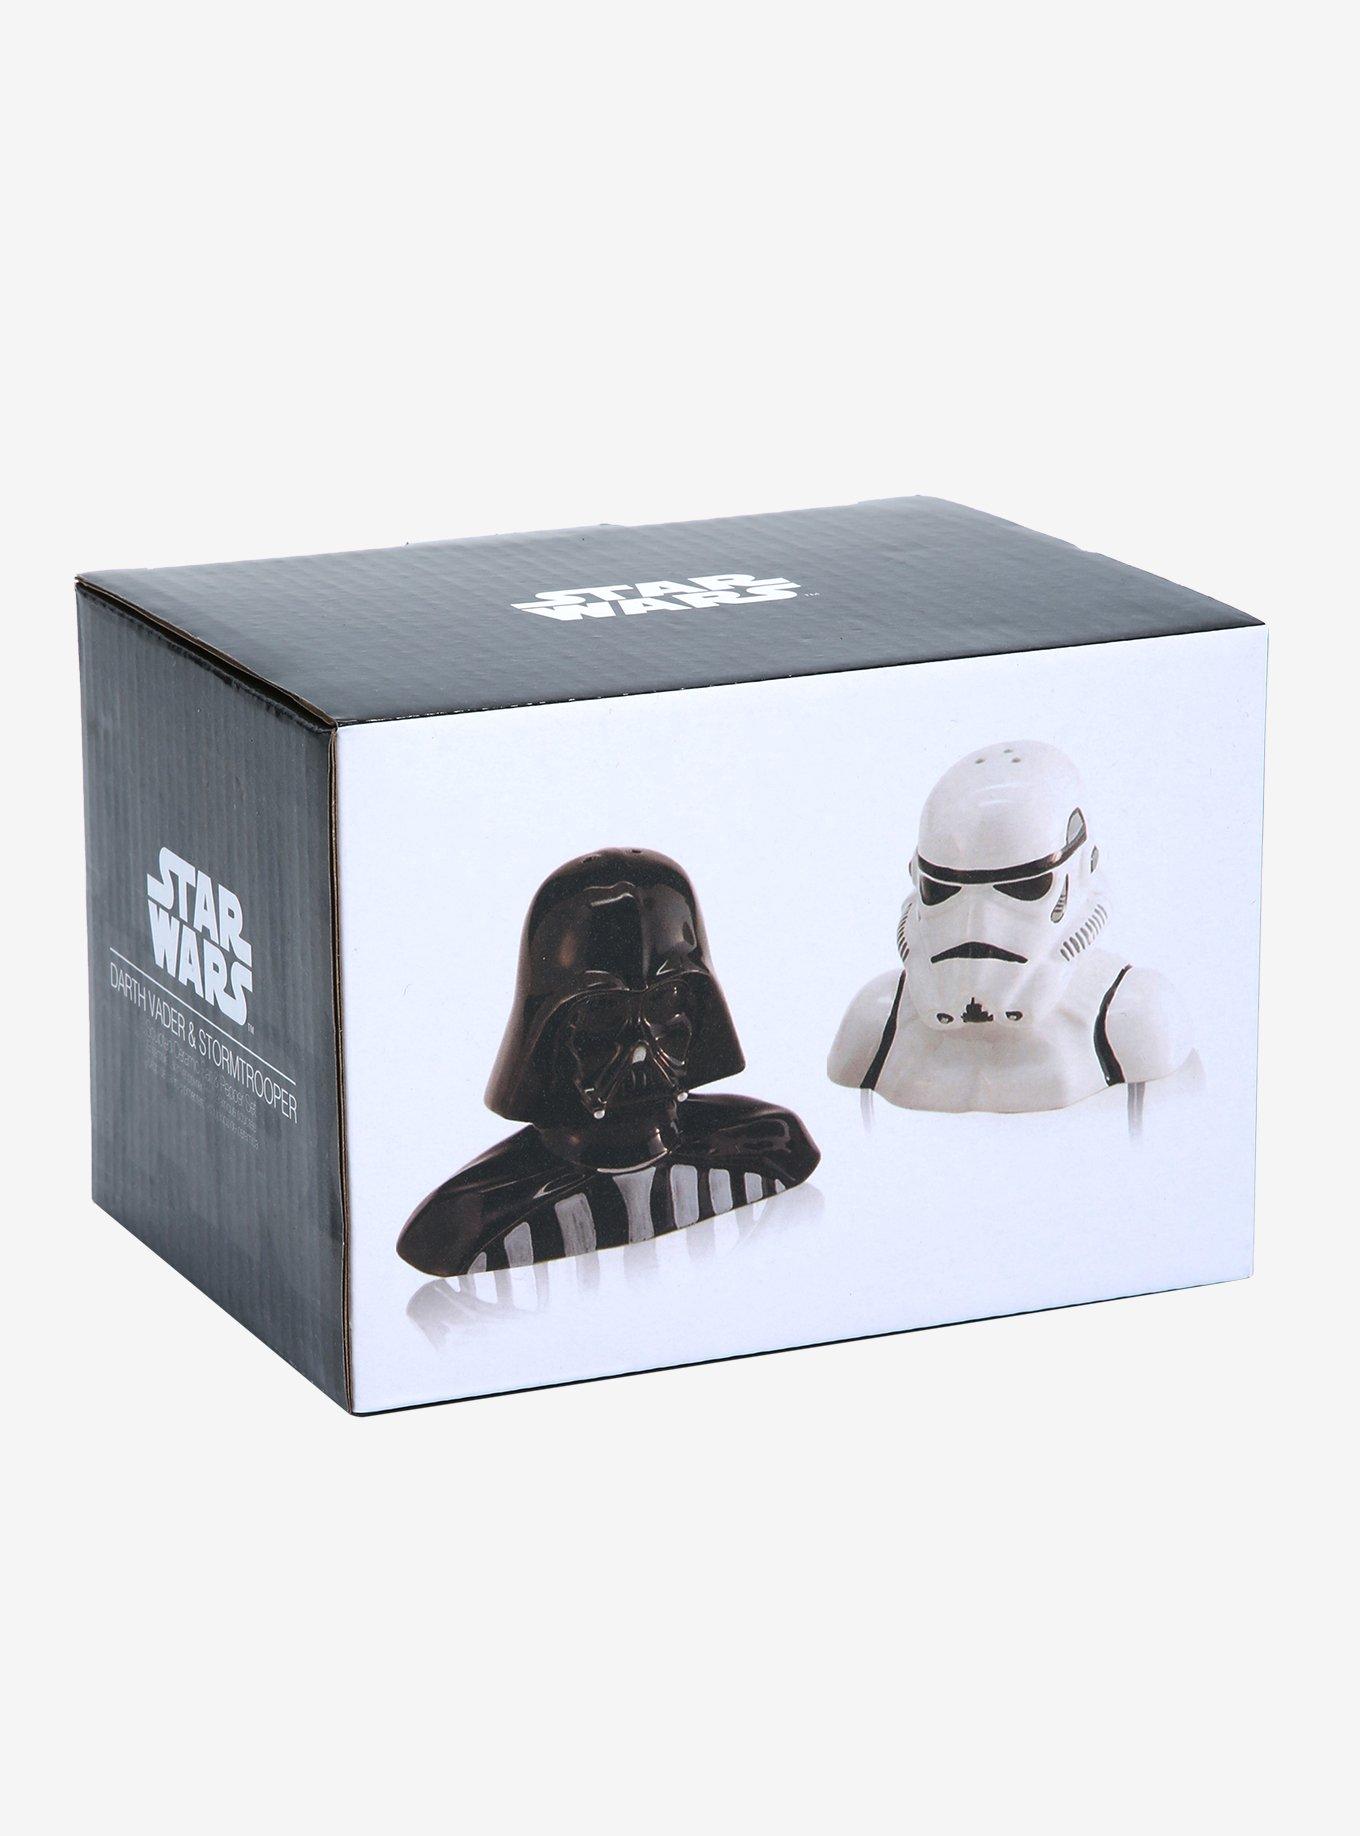 Star Wars Disney Stormtrooper & Darth Vader Salt & Pepper Shakers in Box